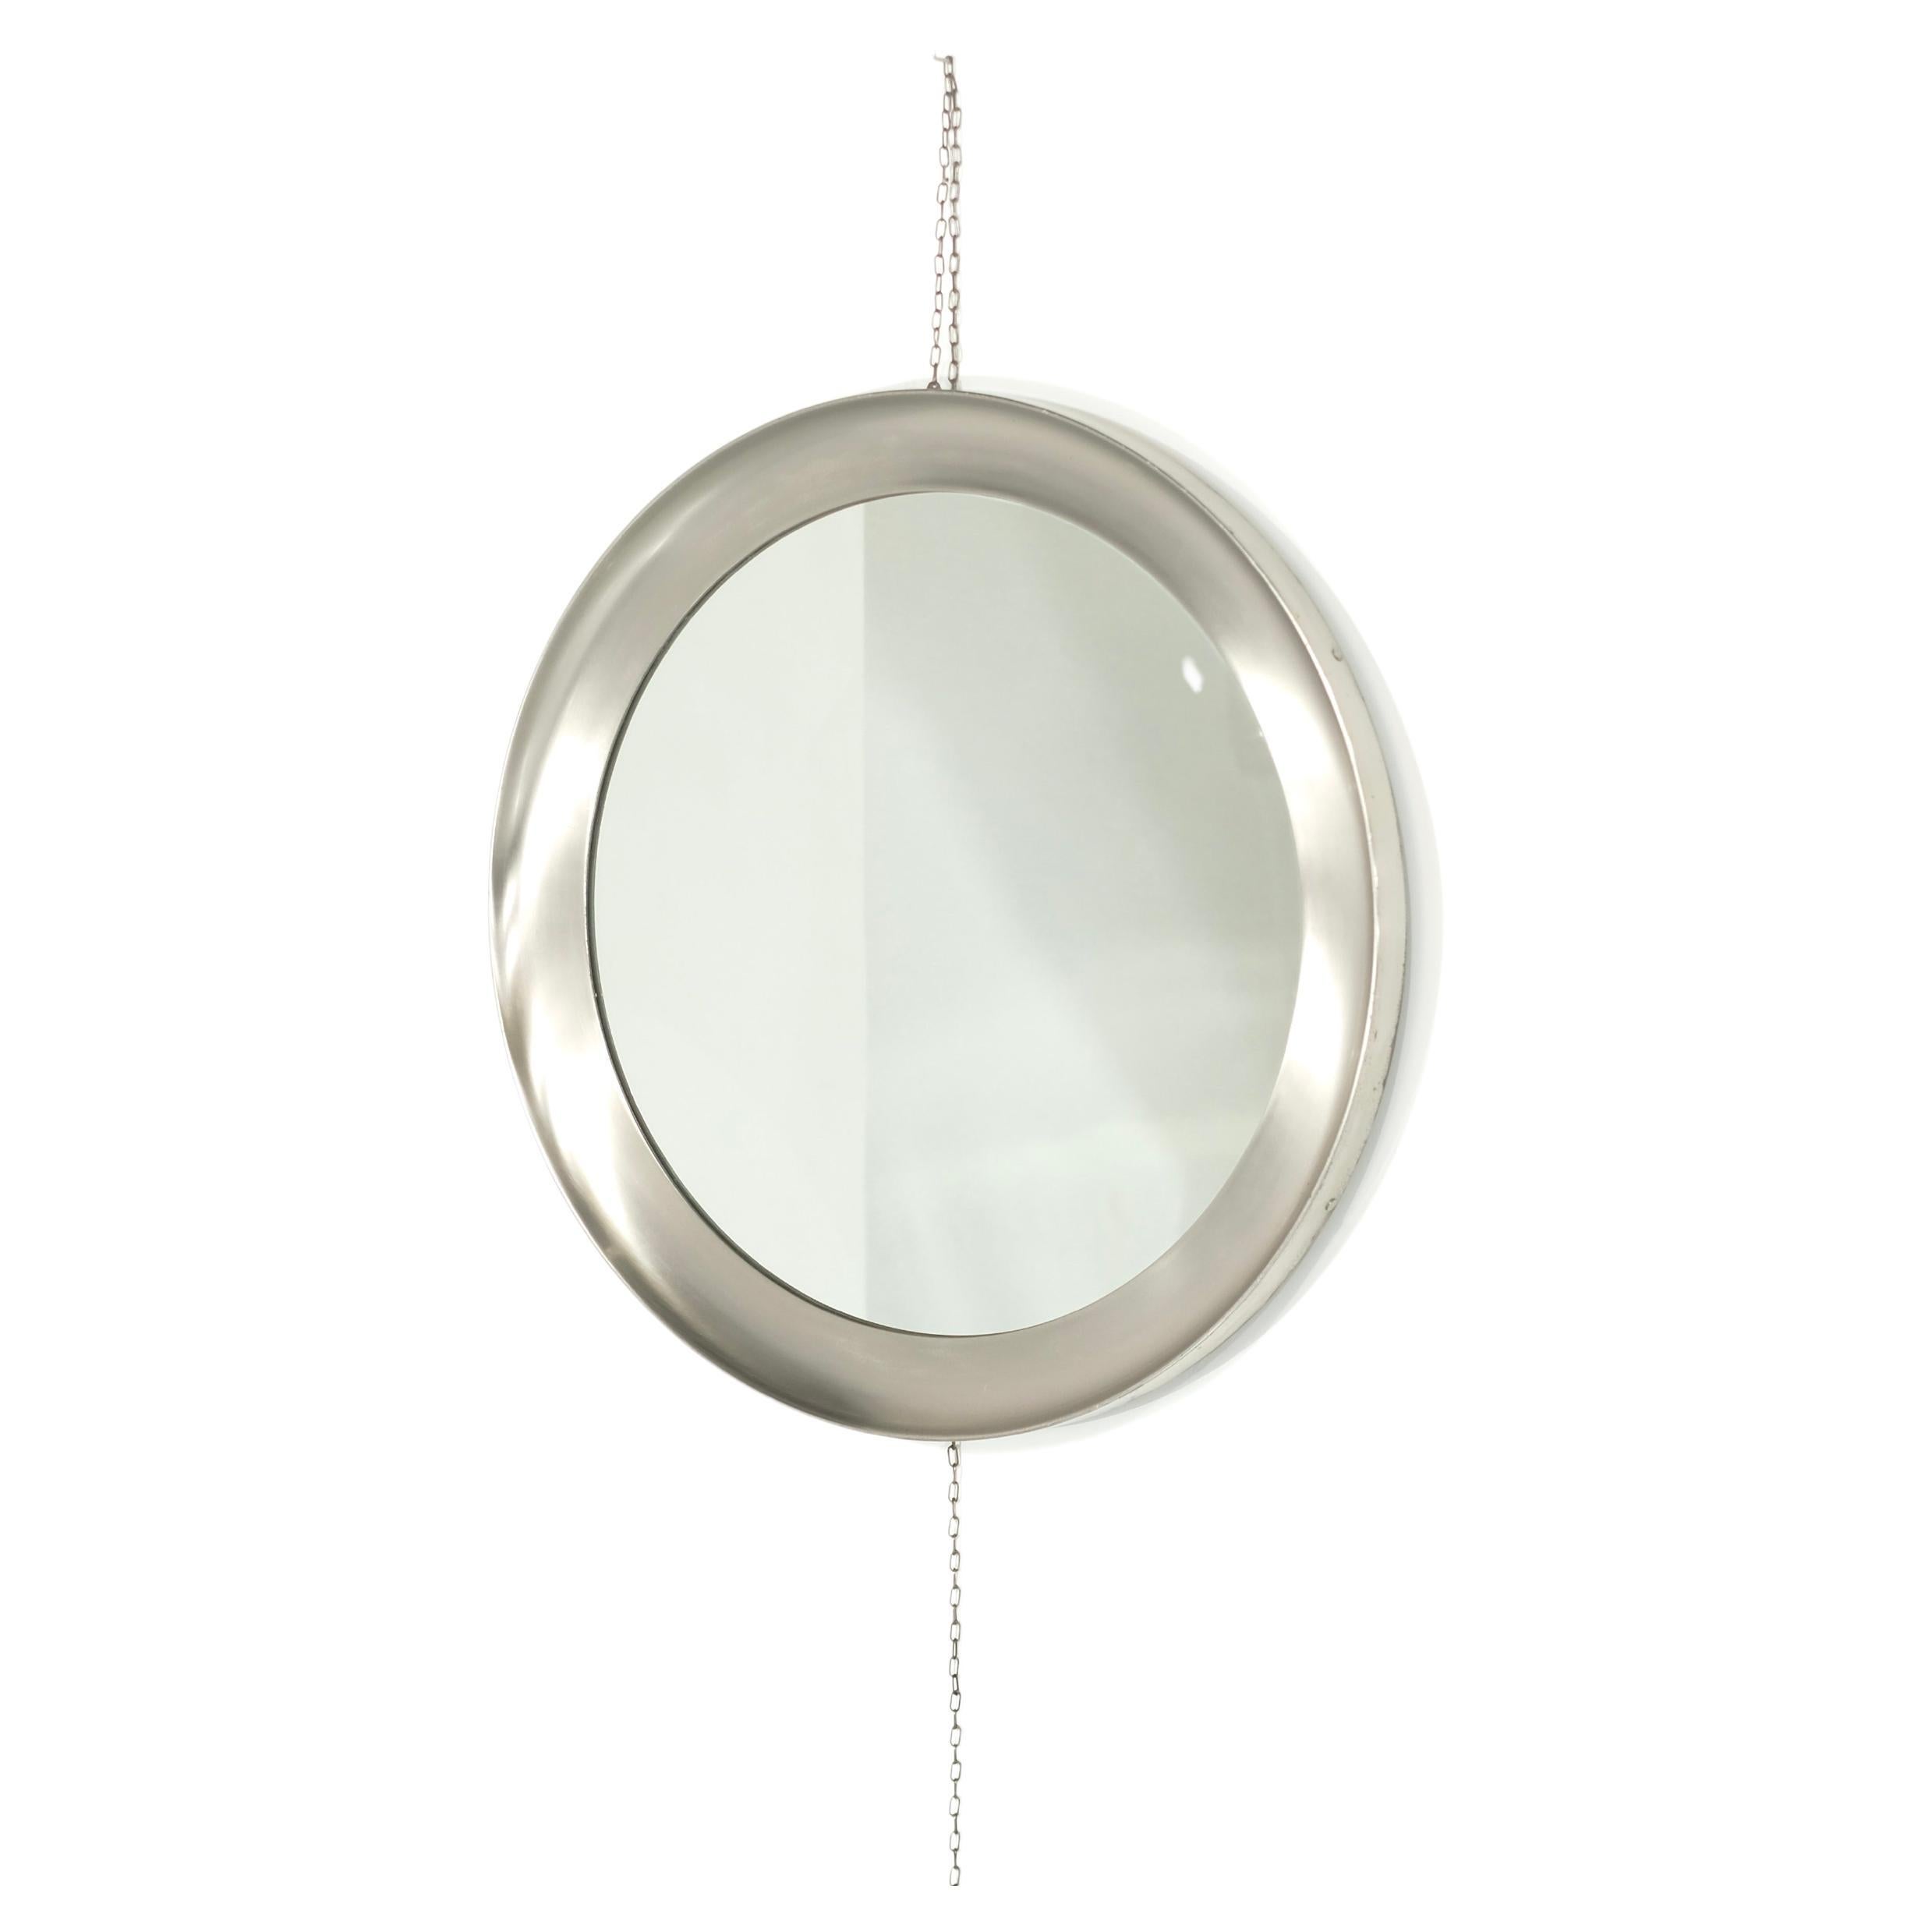 Mirror "Narciso" designed by Sergio Mazza for Artemide, Italy 1960's. For Sale